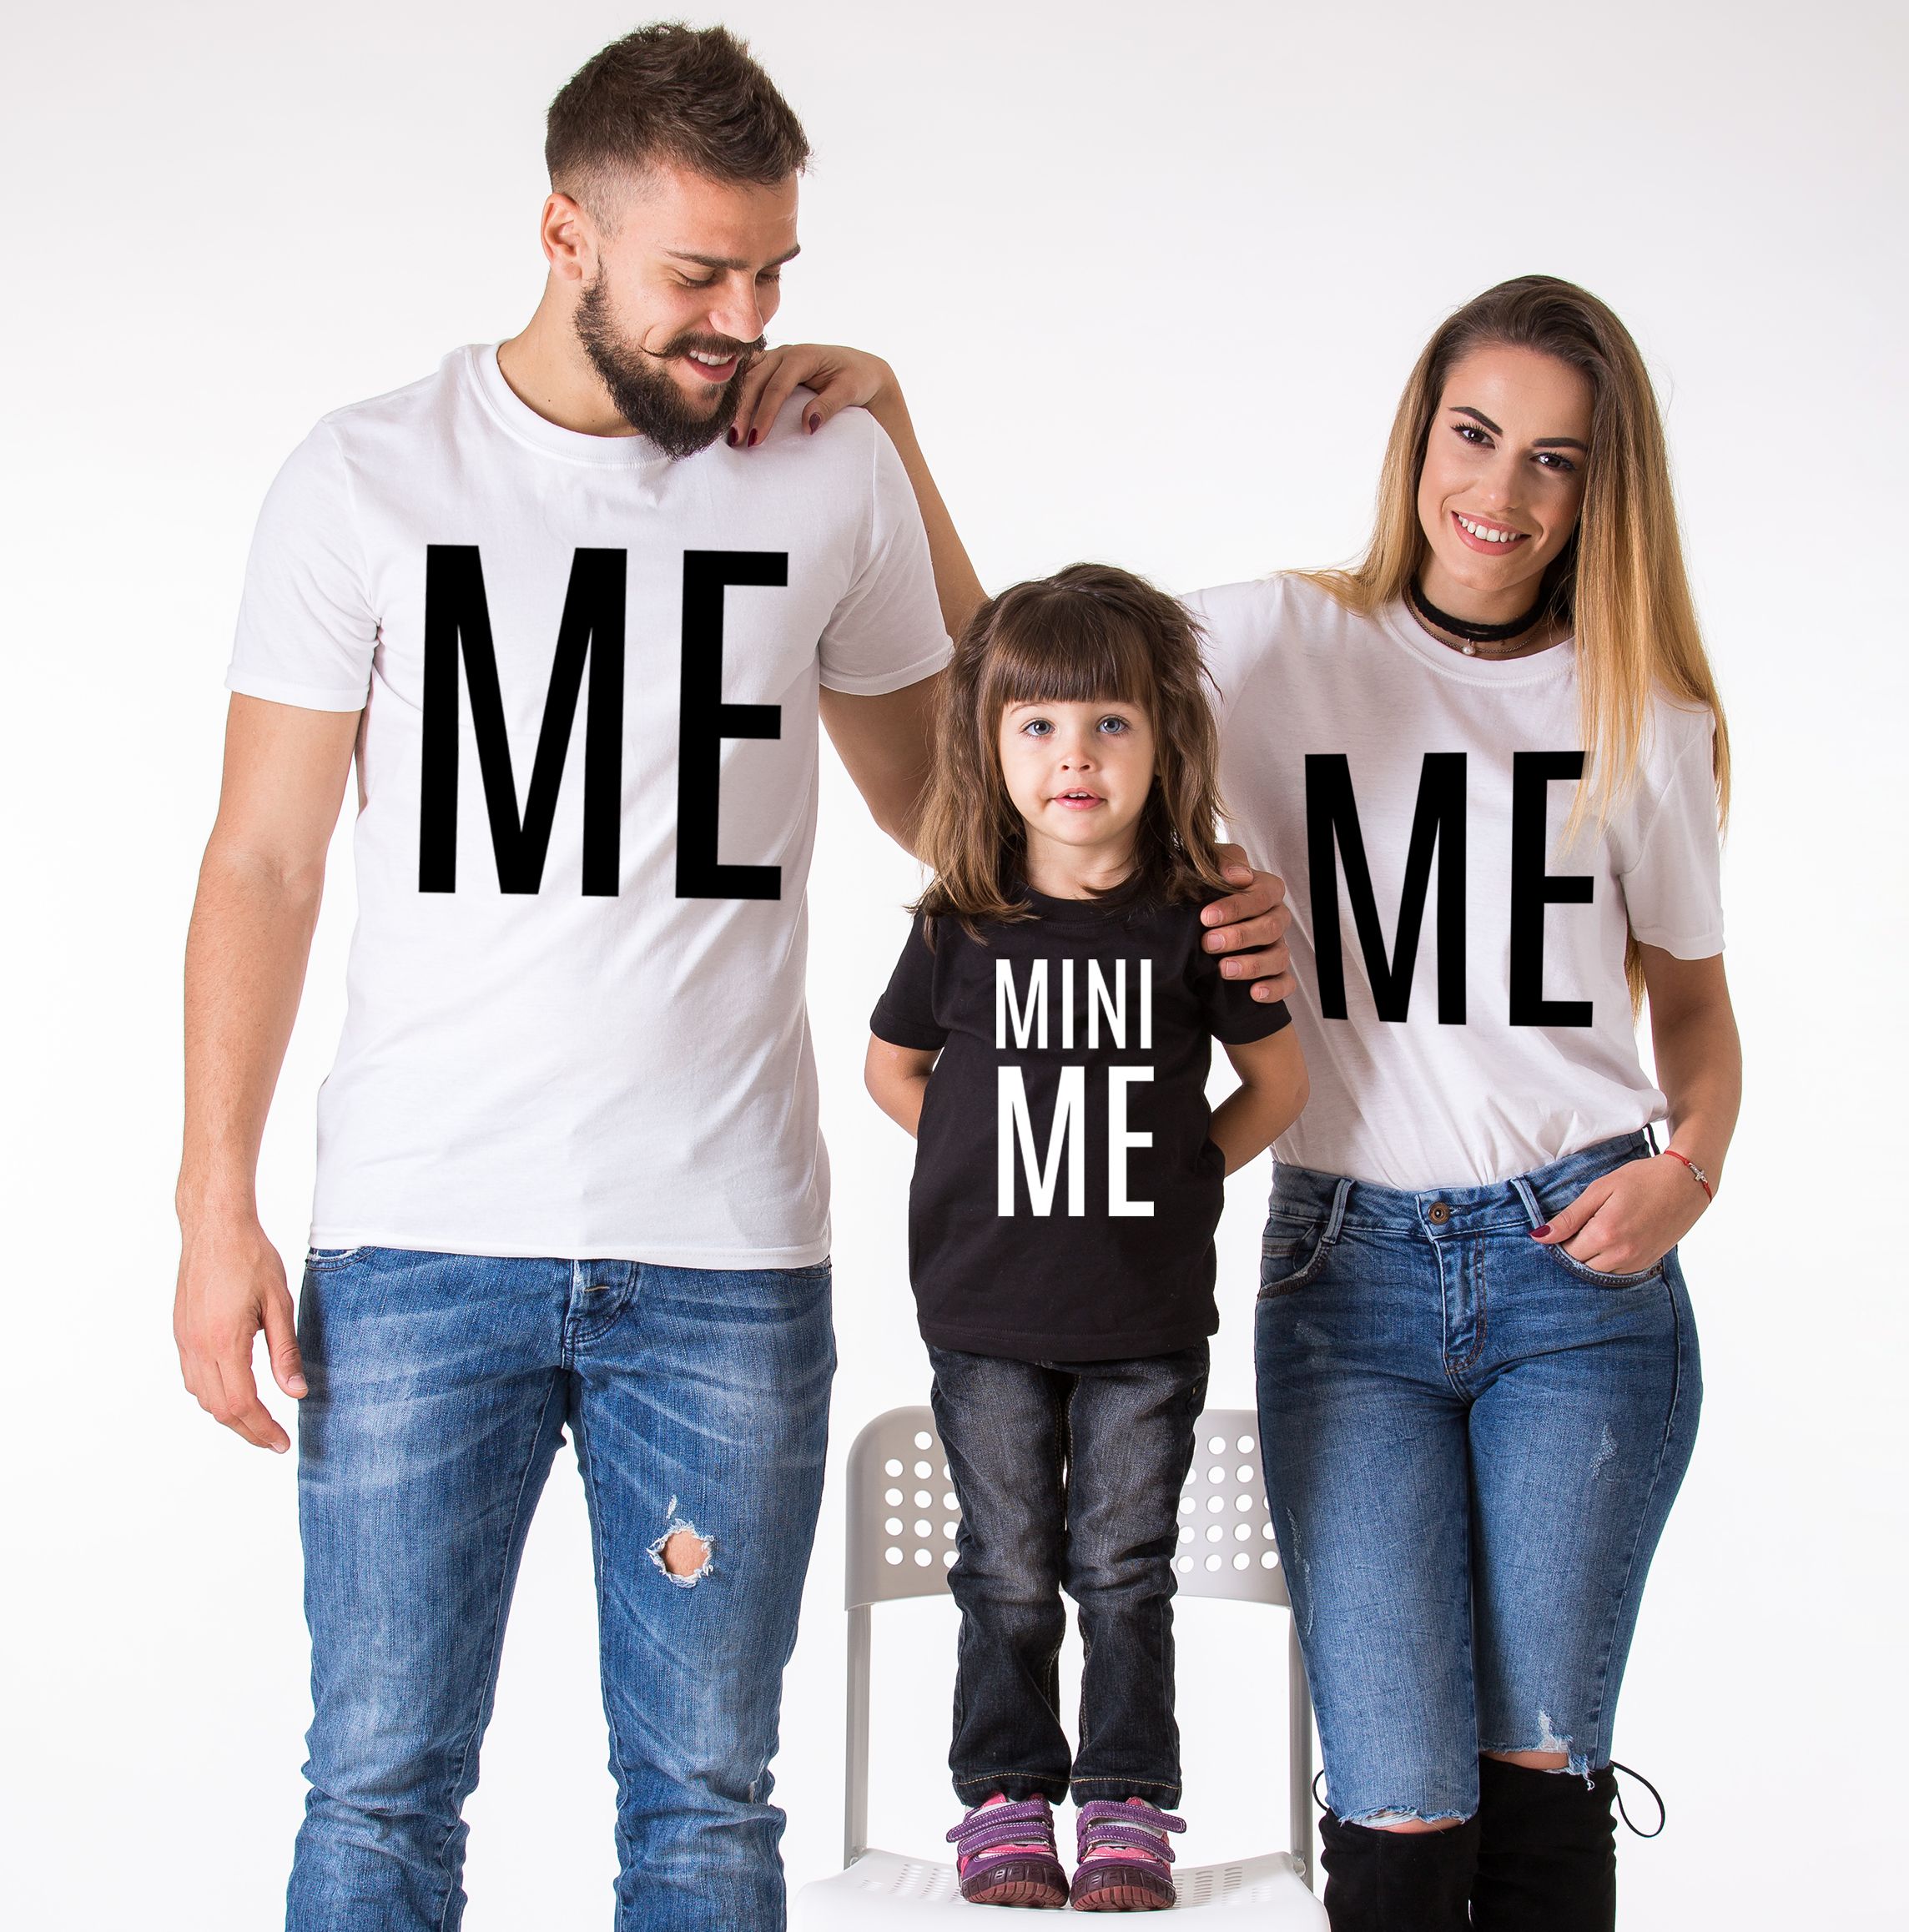 Me Mini Me Shirt, Matching Family Shirts, Unisex Shirts